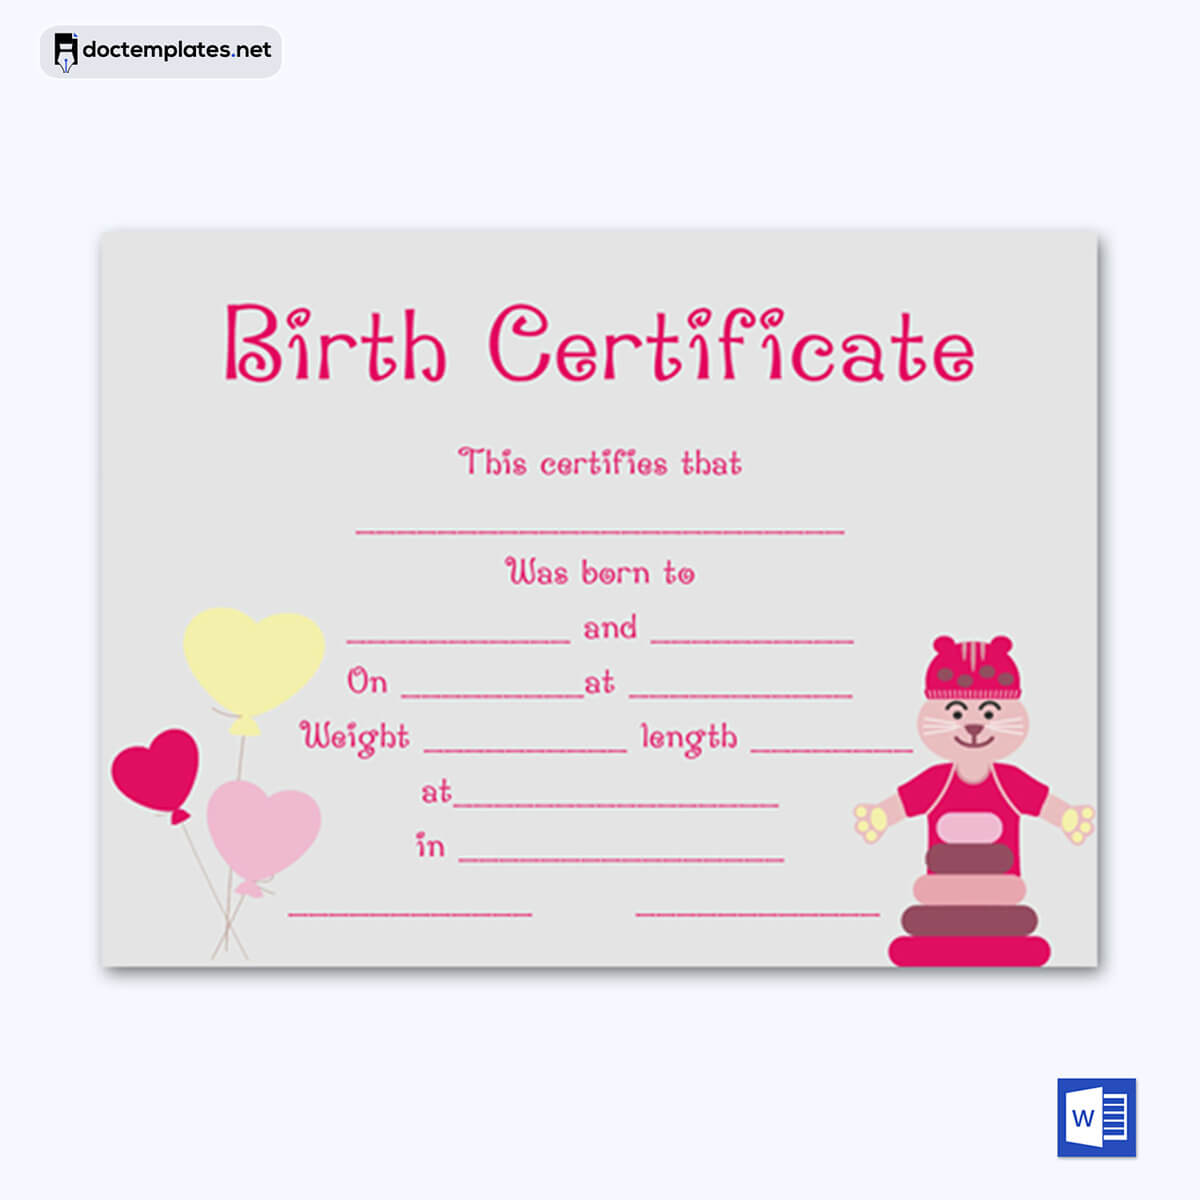 
birth certificate template word 06